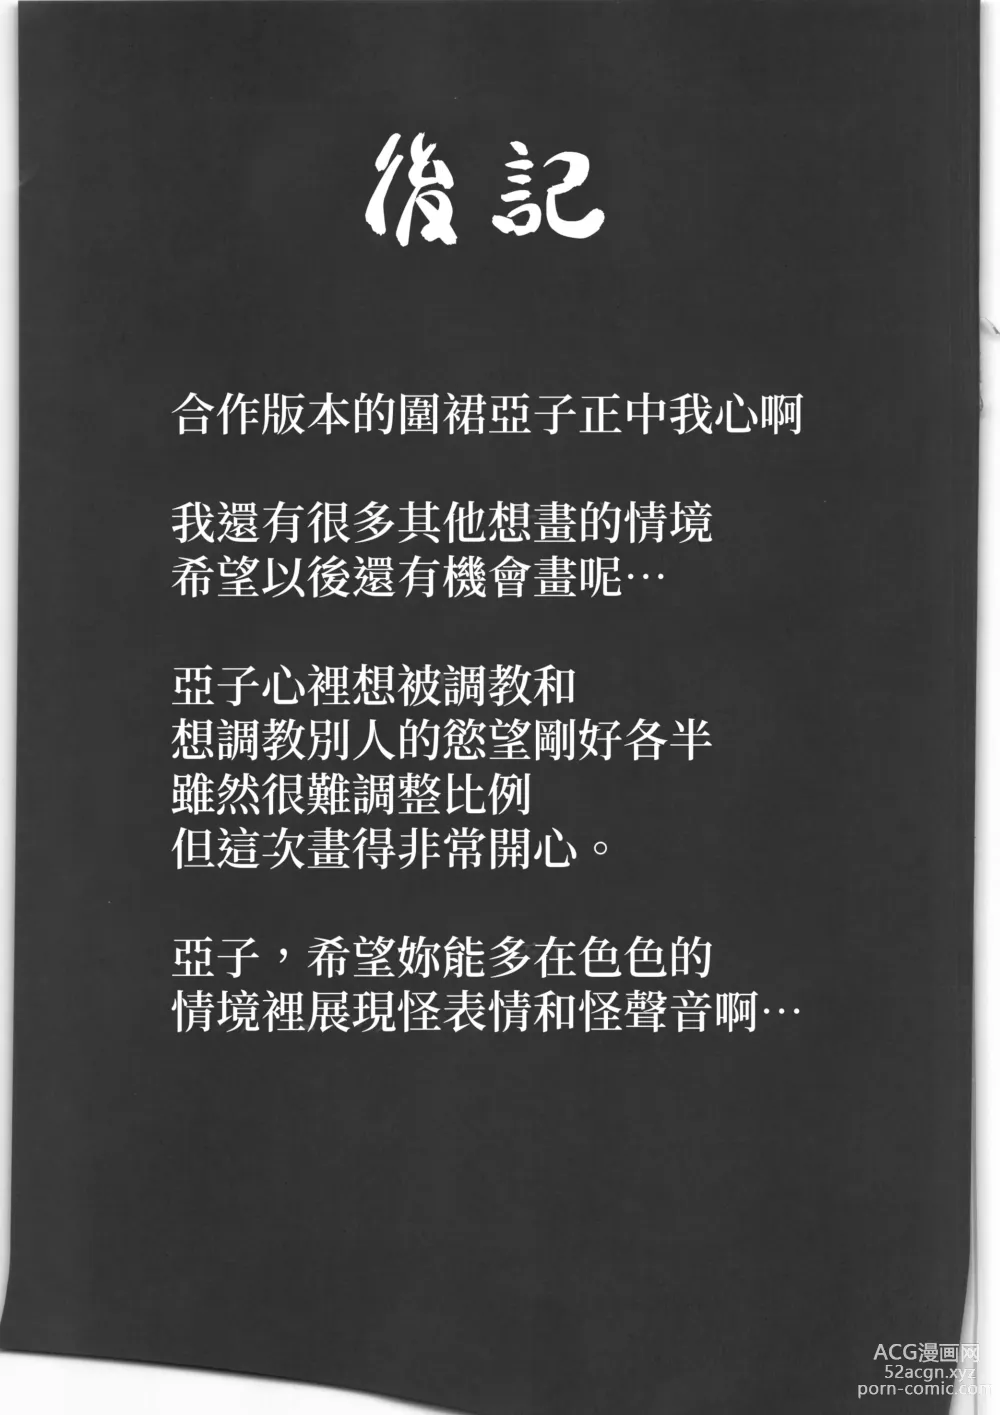 Page 27 of doujinshi 關於格黑娜行政官的性處理事情